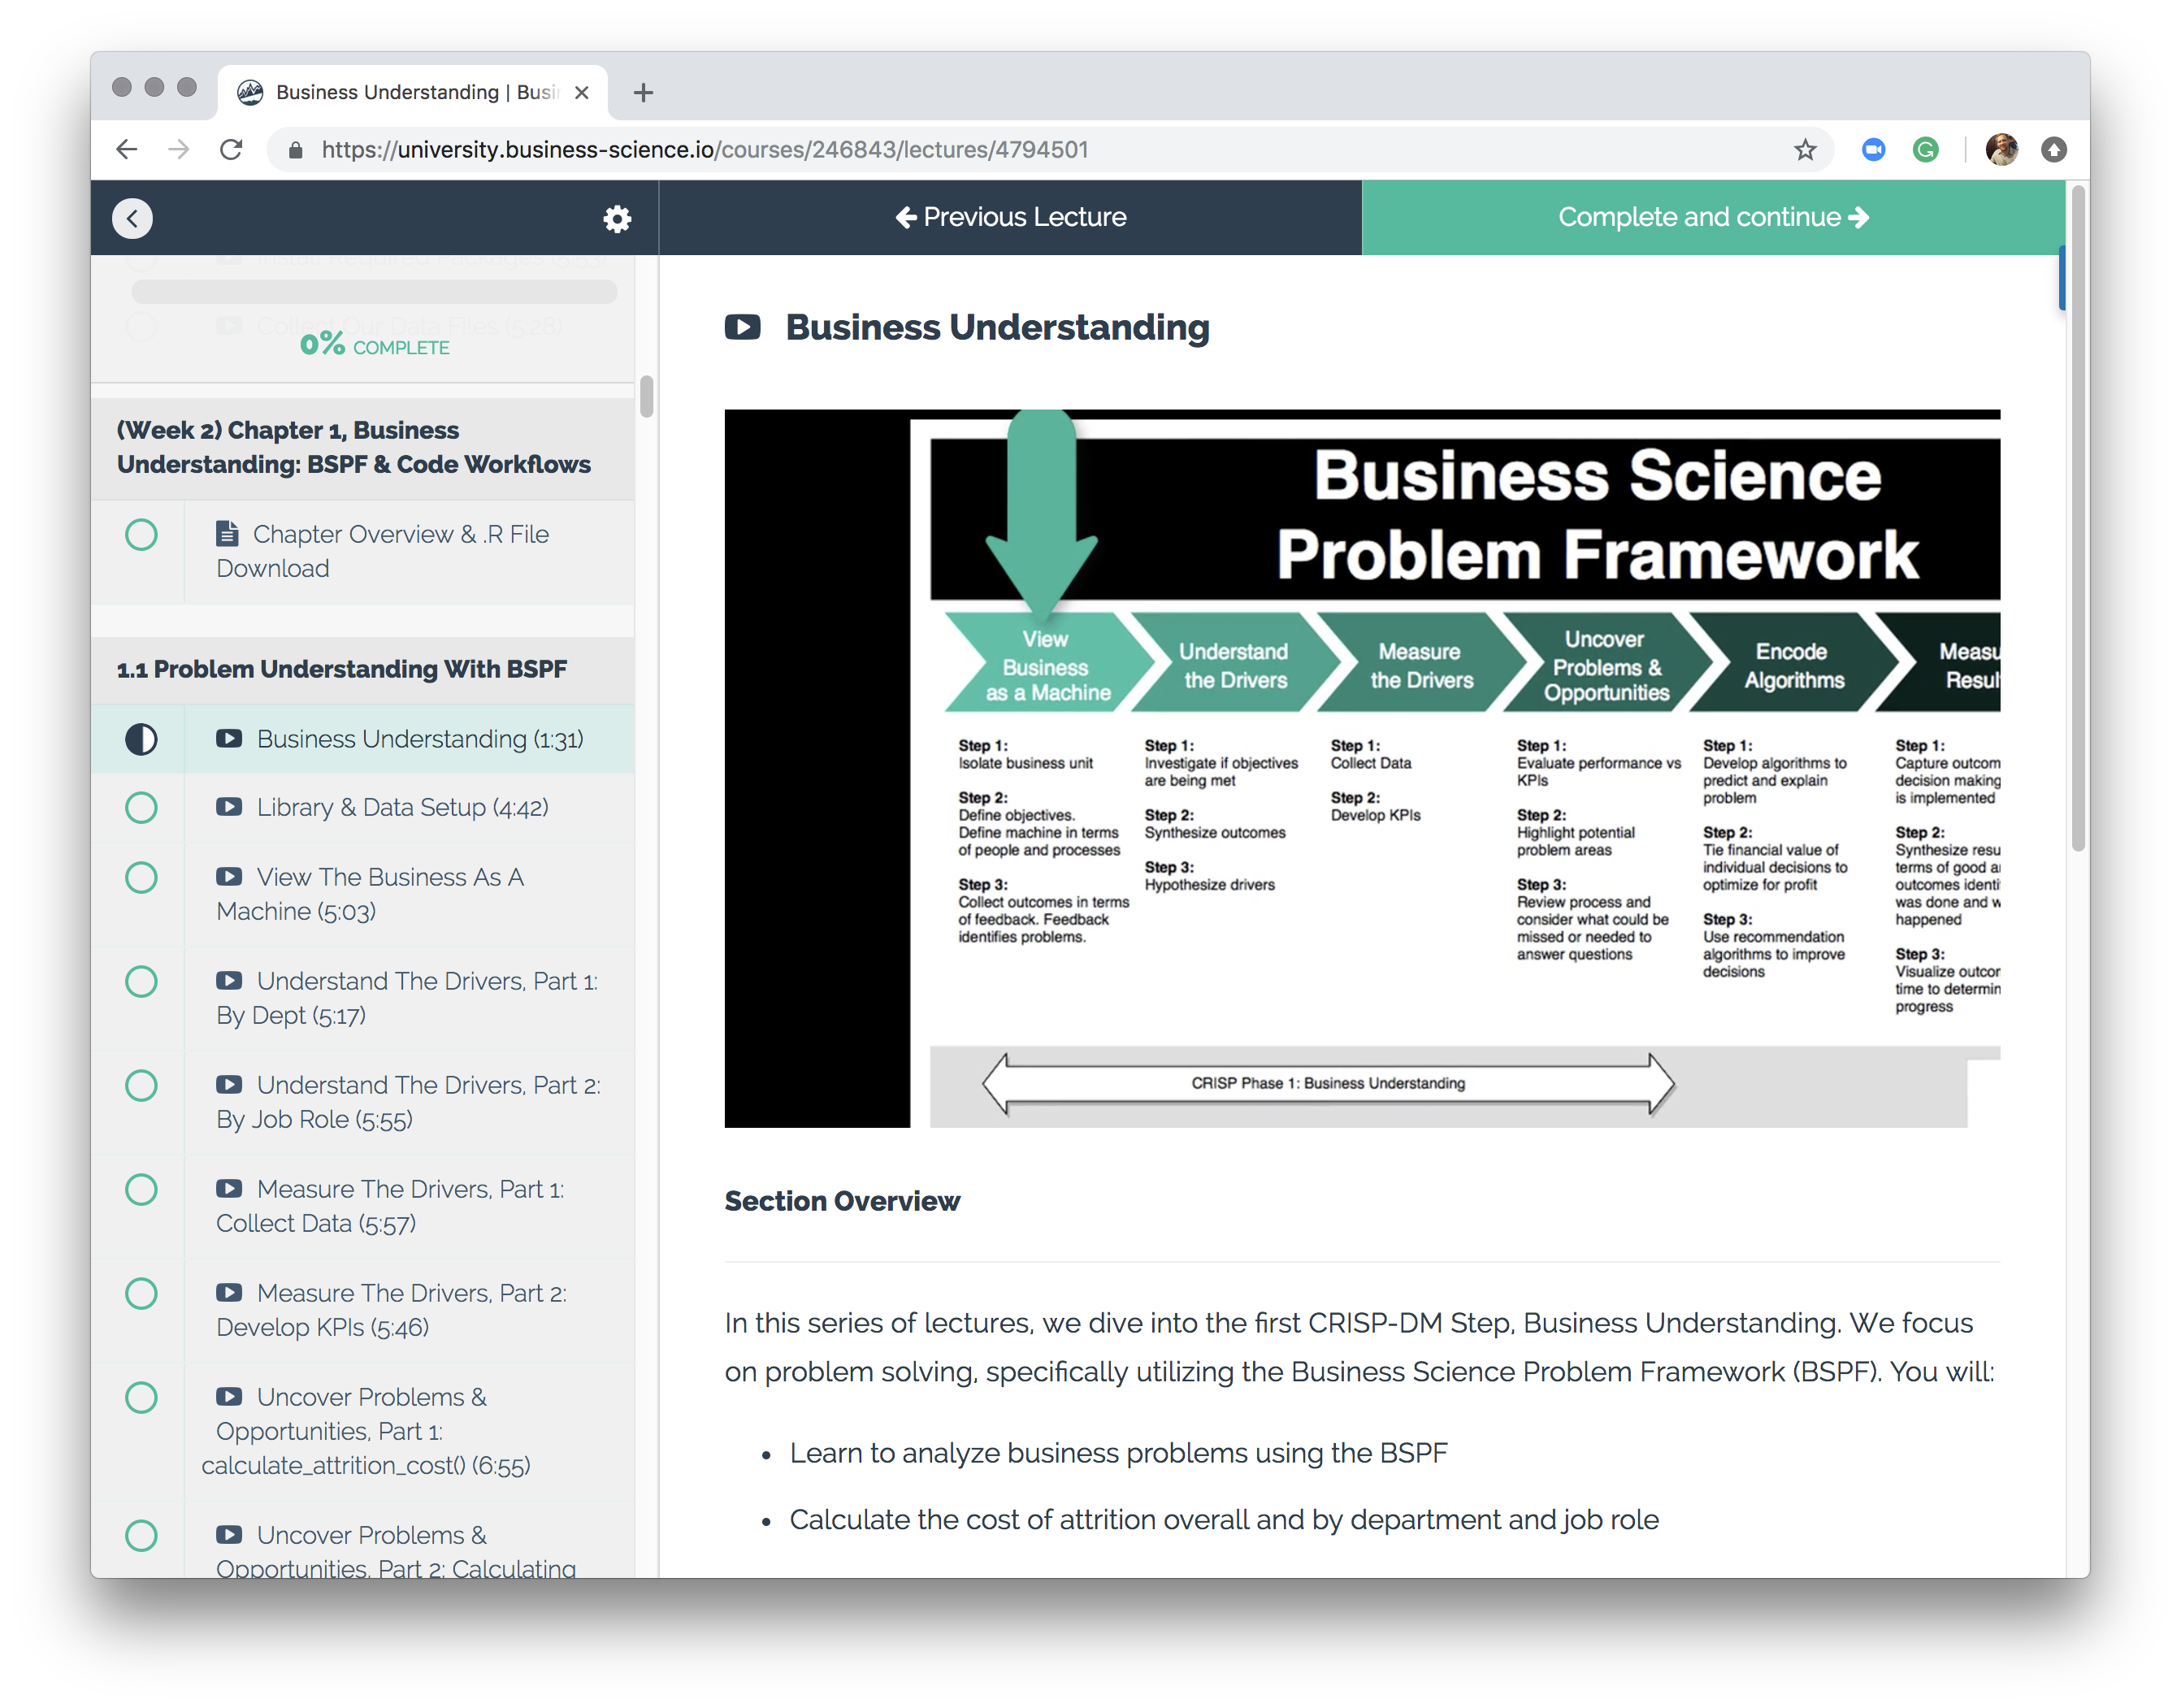 Business Science Problem Framework (BSPF)